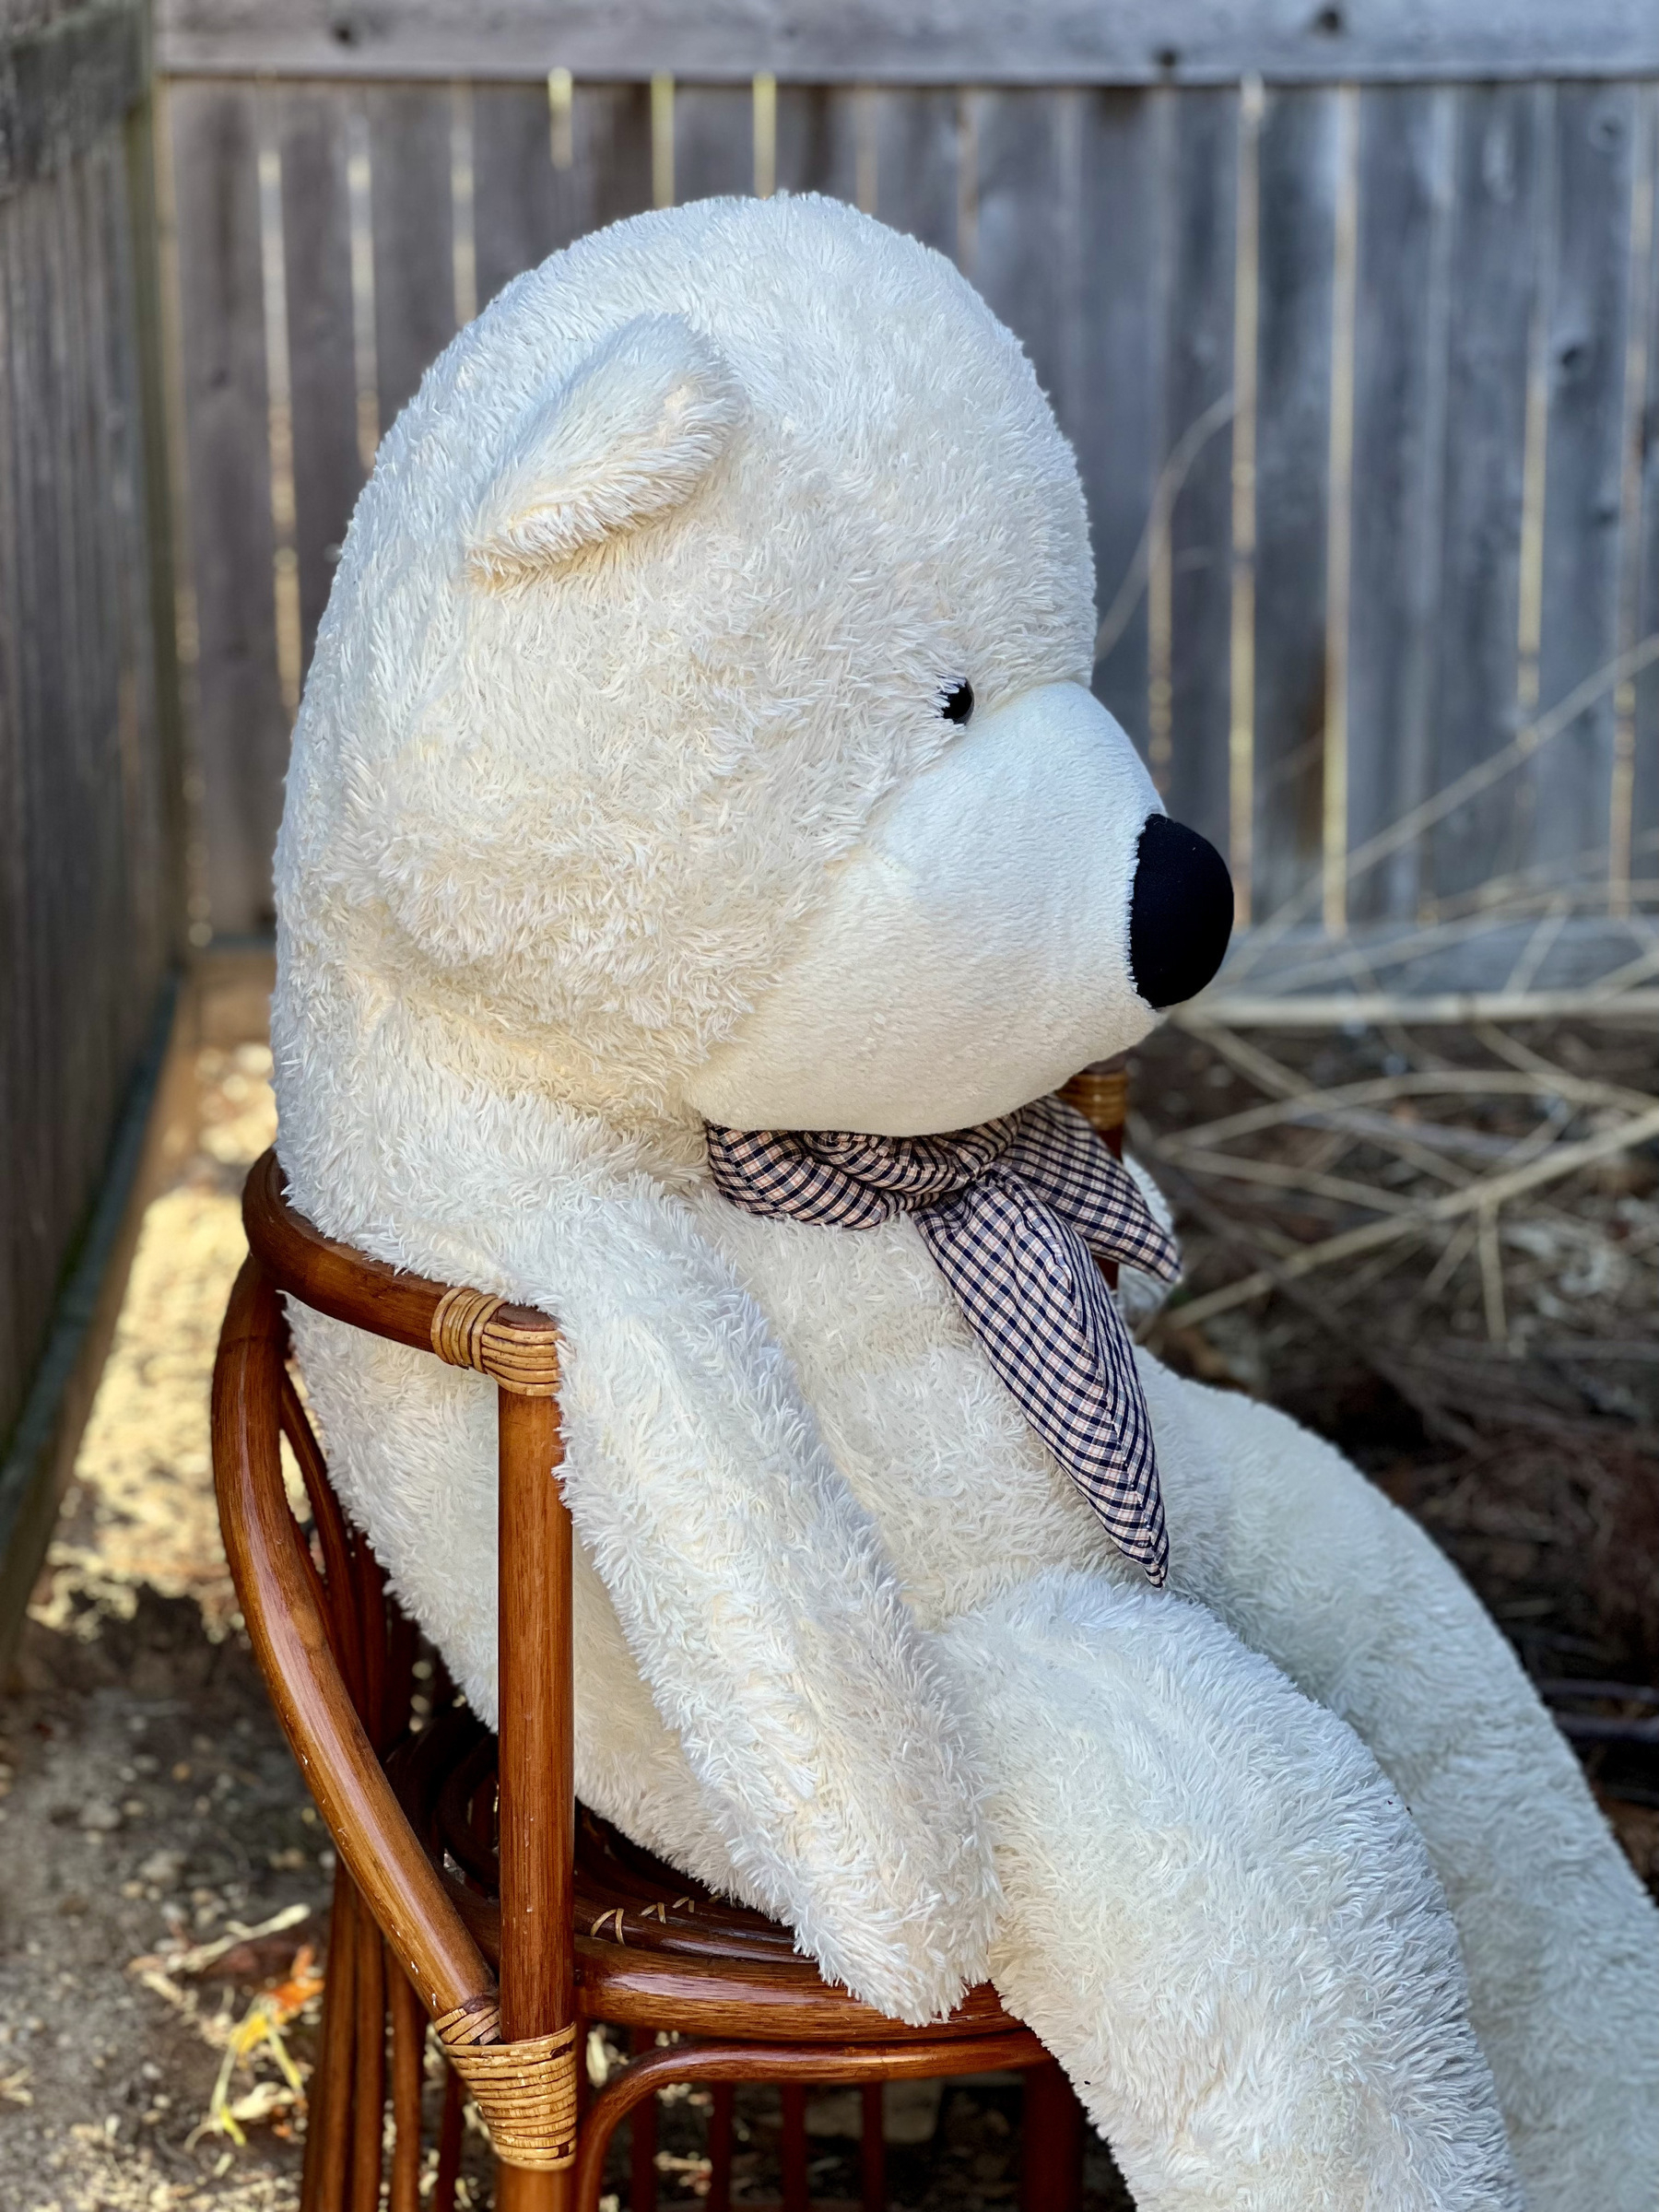 Large teddy bear sitting in chair